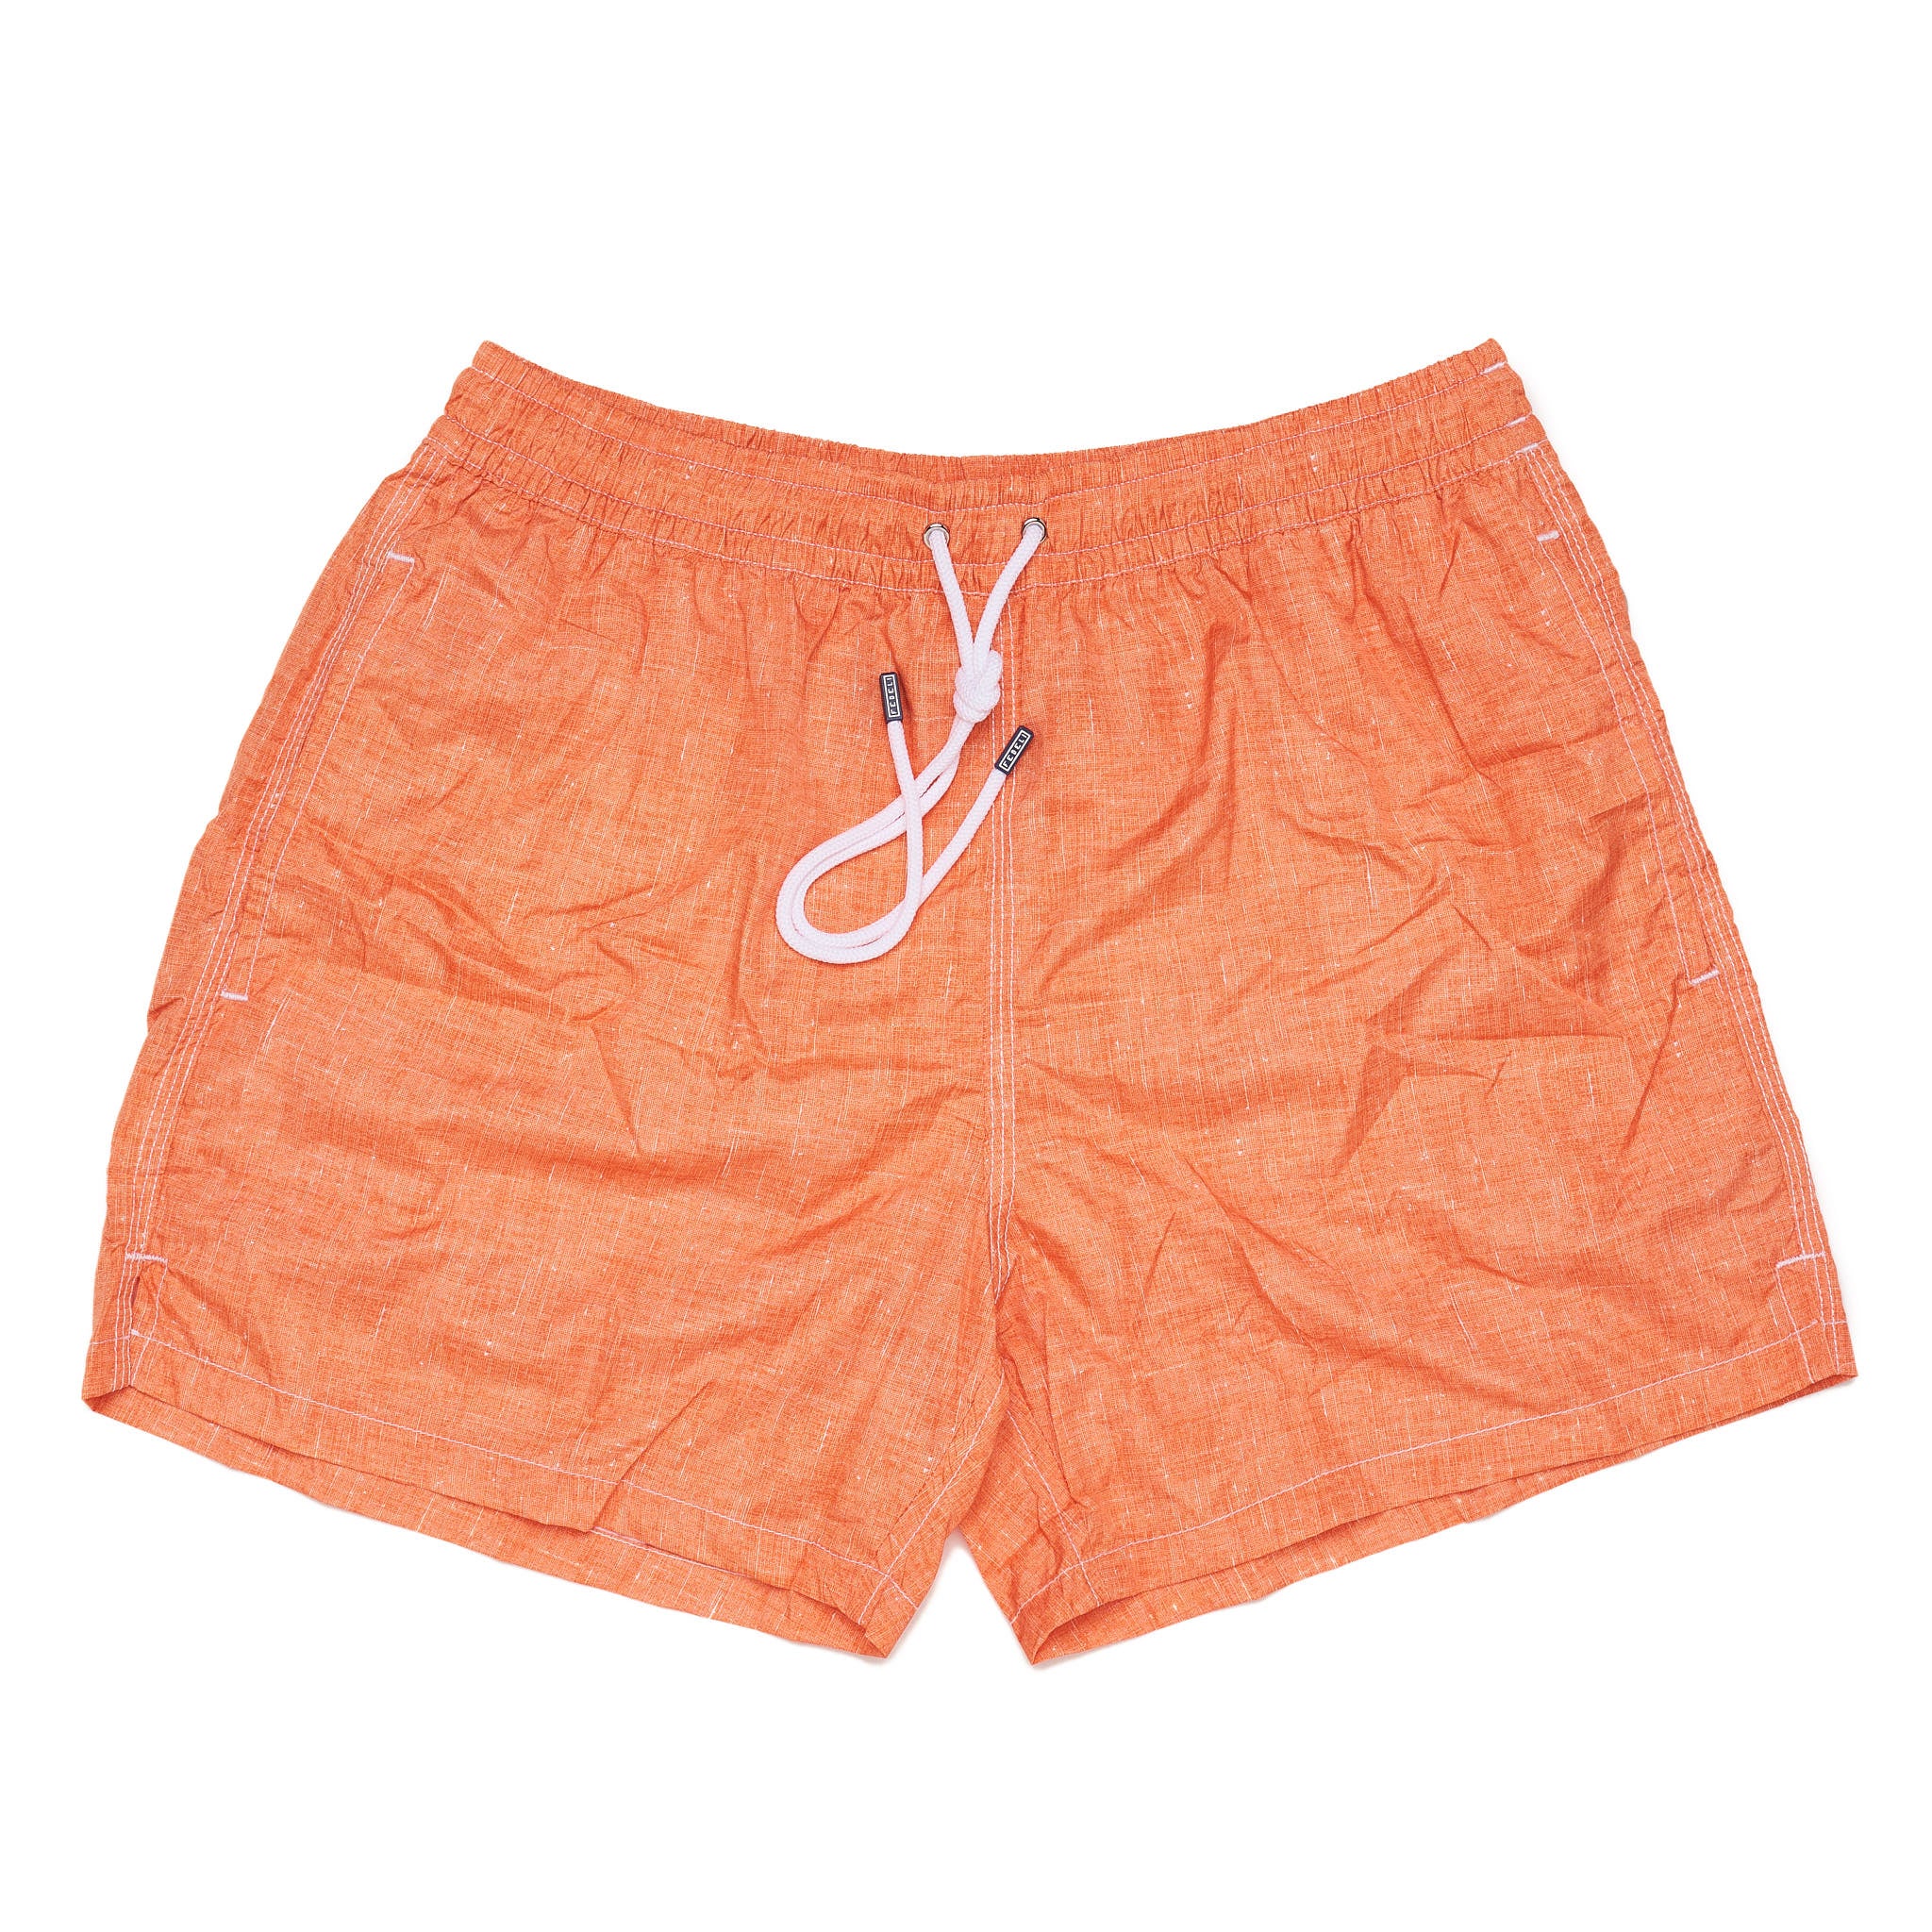 FEDELI Orange Chambray Printed Madeira Airstop Swim Shorts Trunks NEW S FEDELI